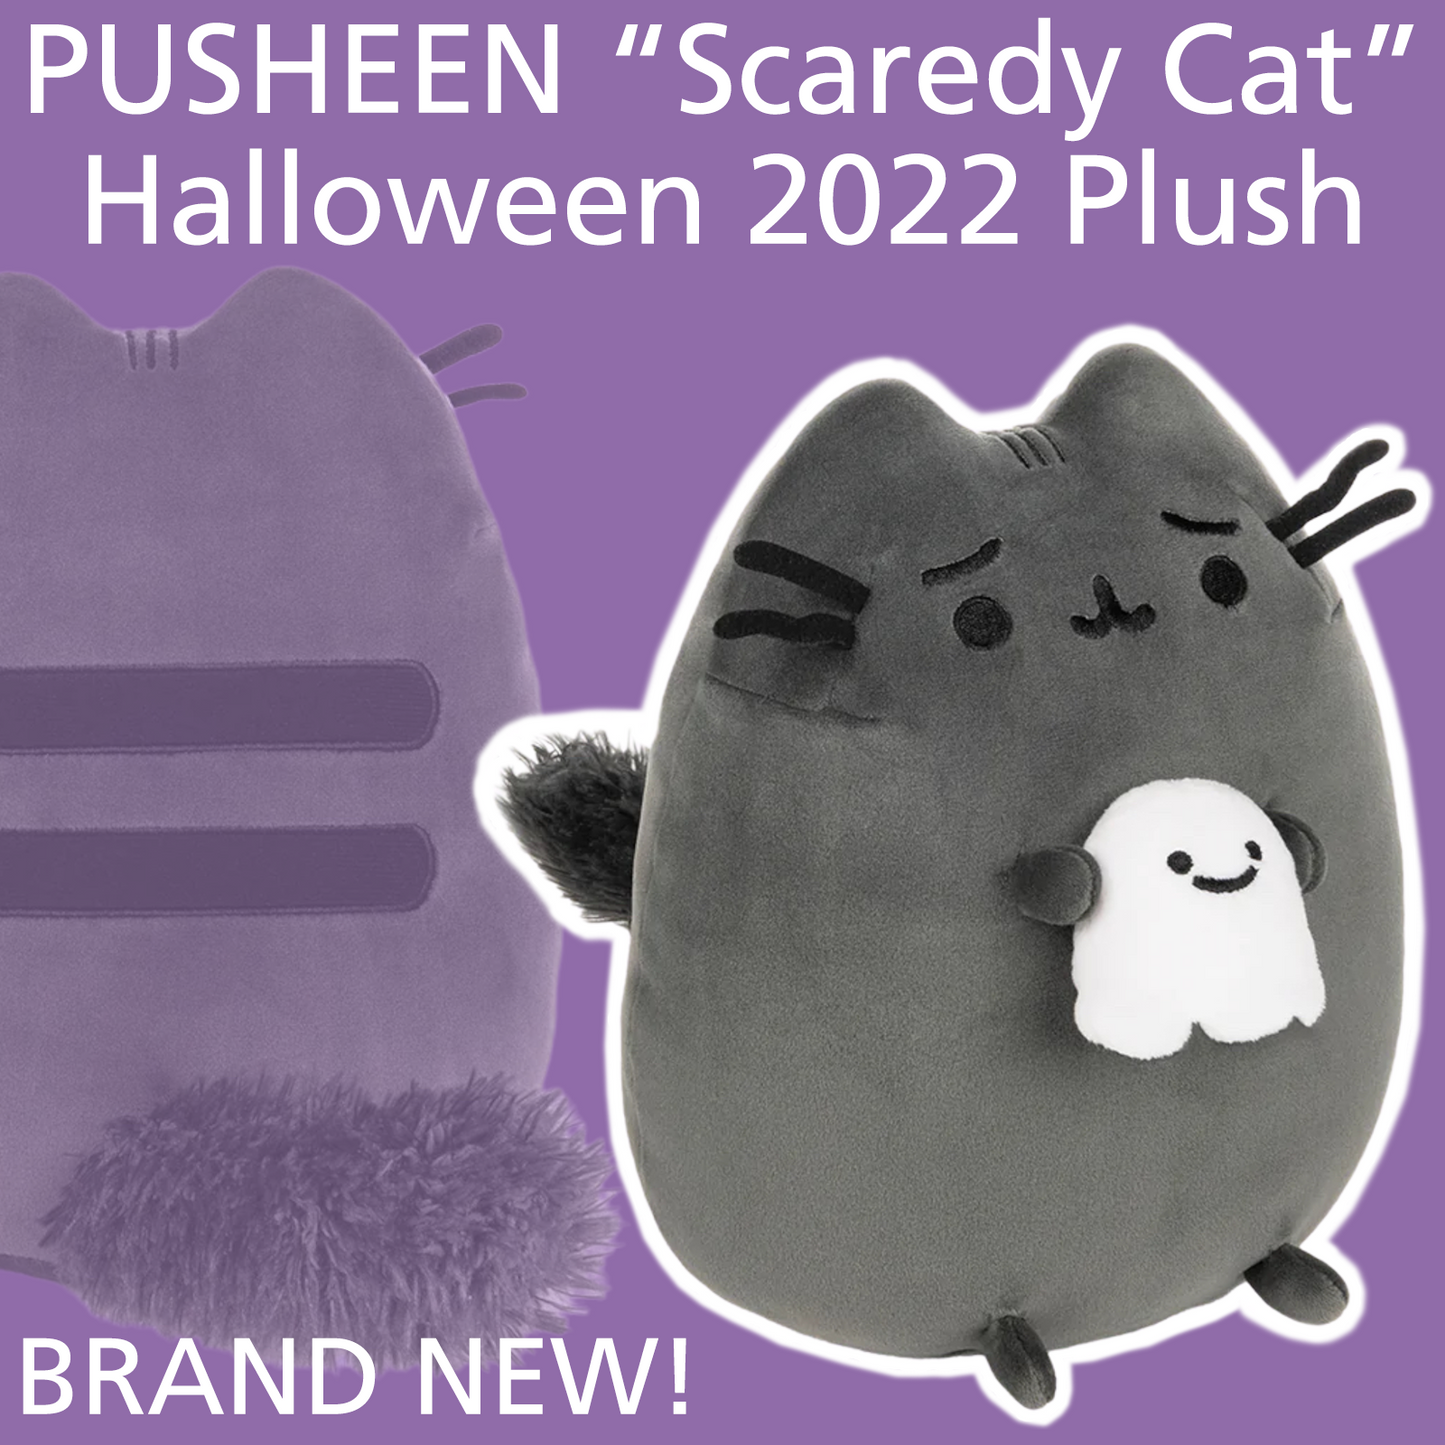 PUSHEEN Scaredy Cat Halloween Plush (9.5" GUND Plushie) NEW LIMITED EDITION 2022